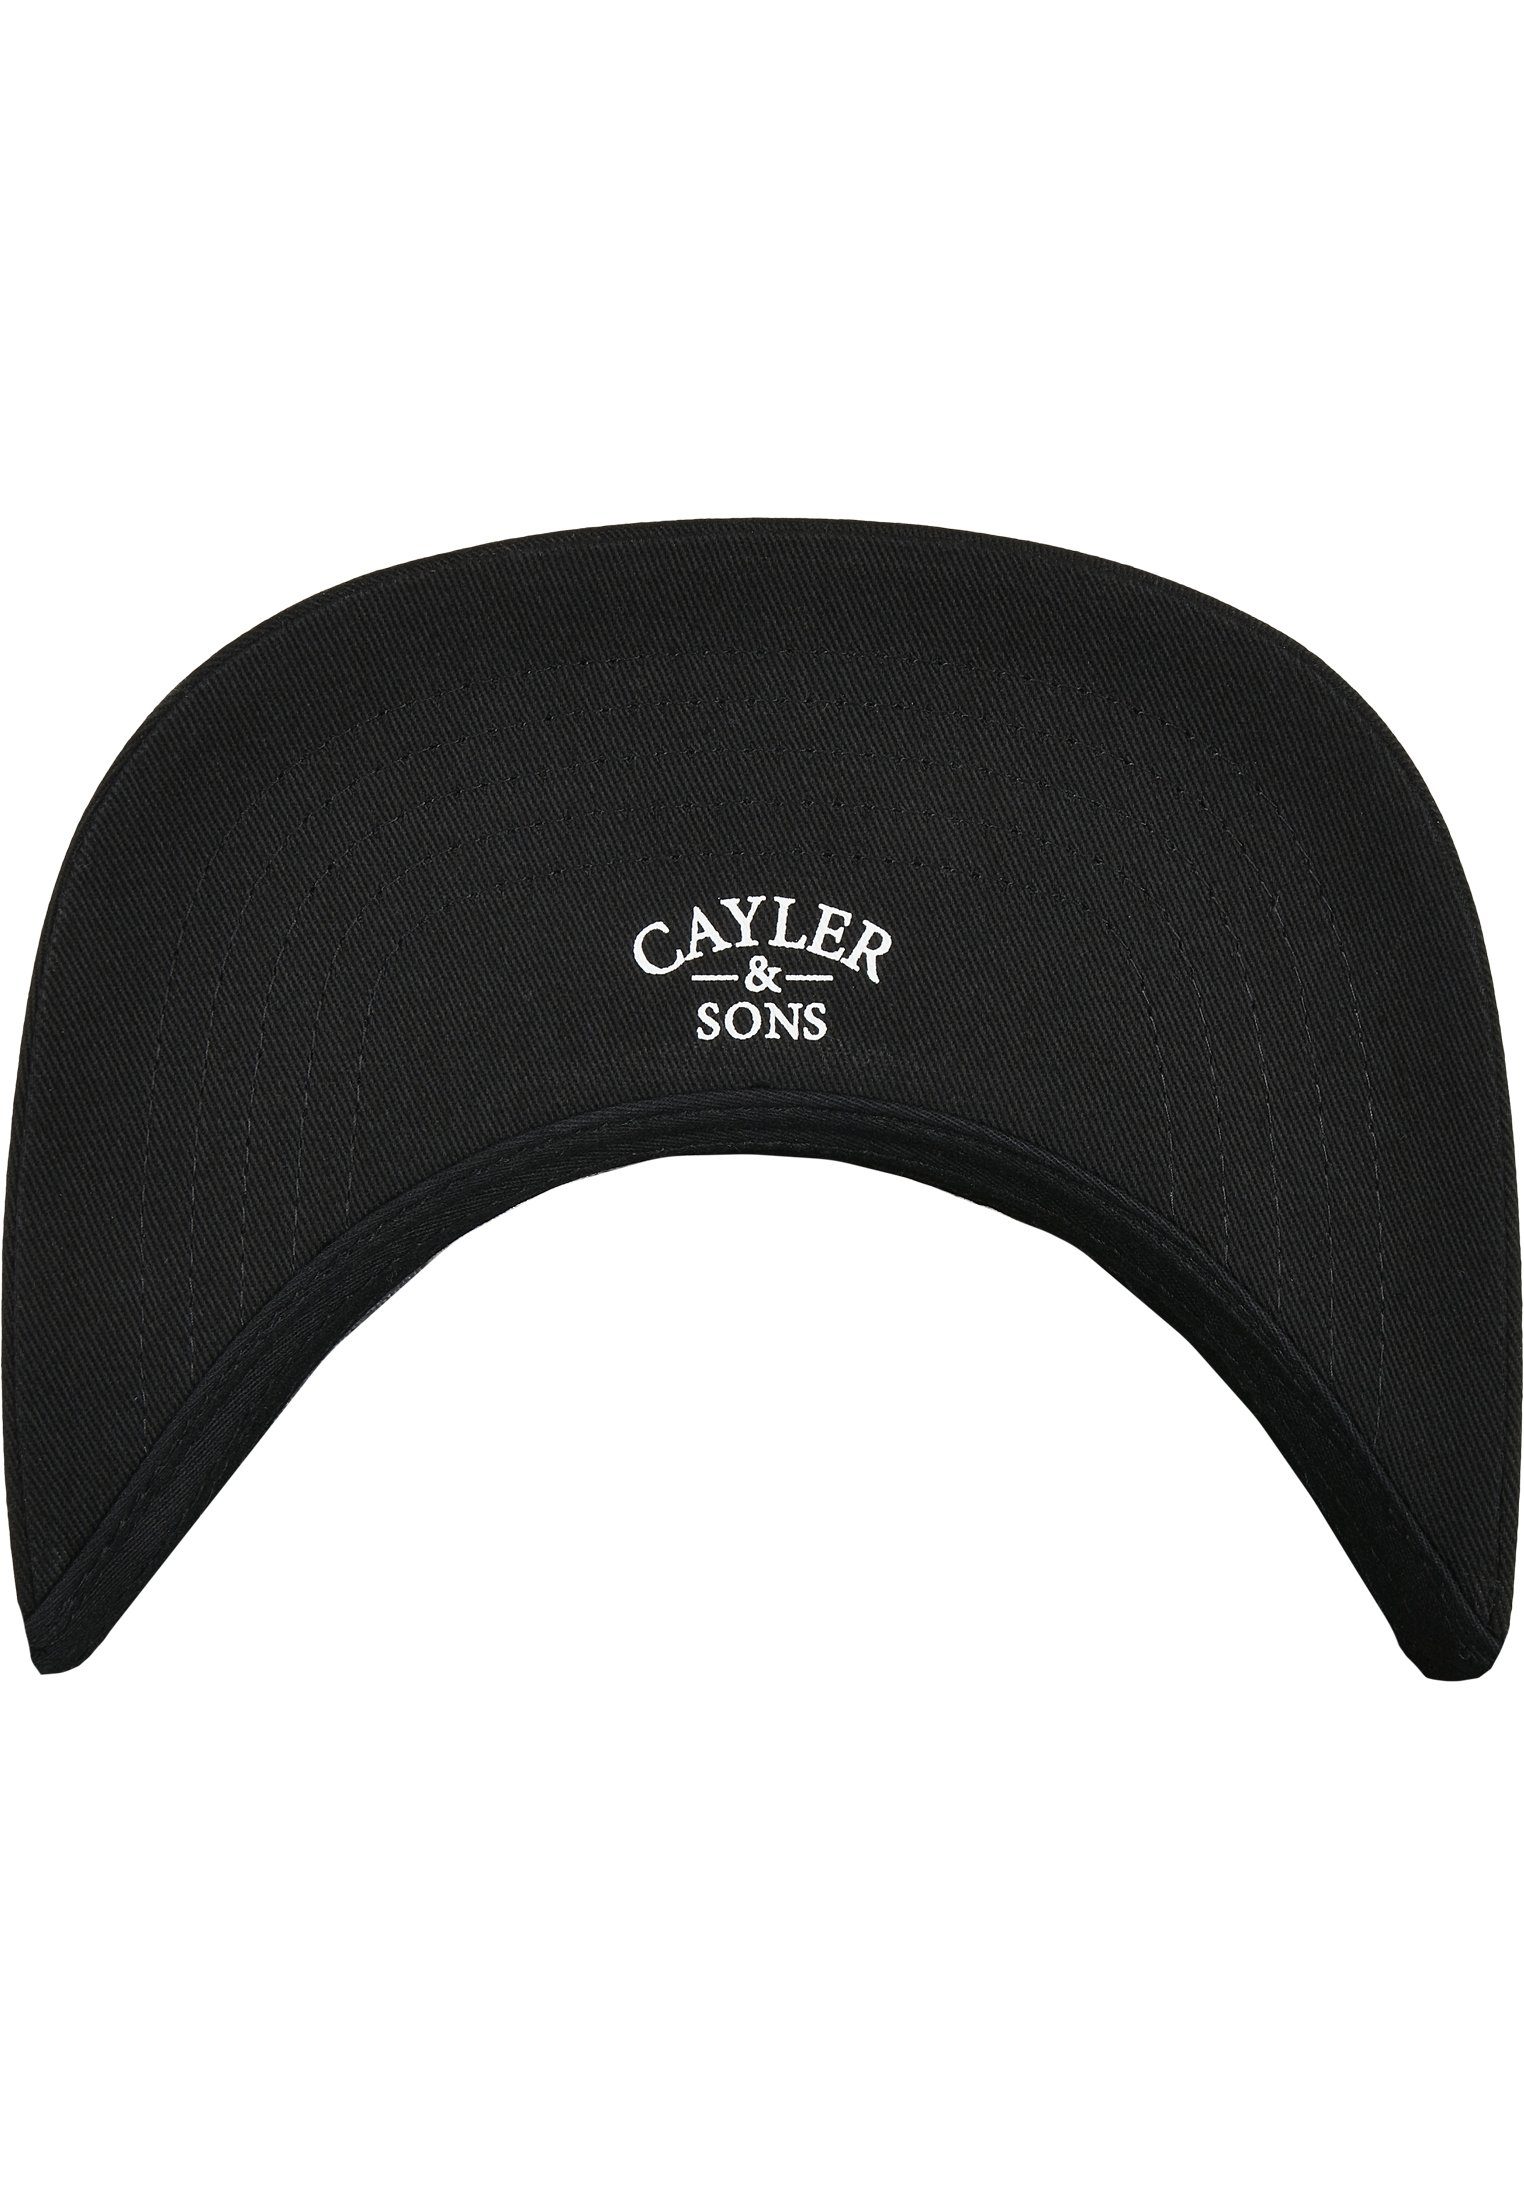 CAYLER & SONS Flex Dark C&S WL Cap Cap Trucker Flashin